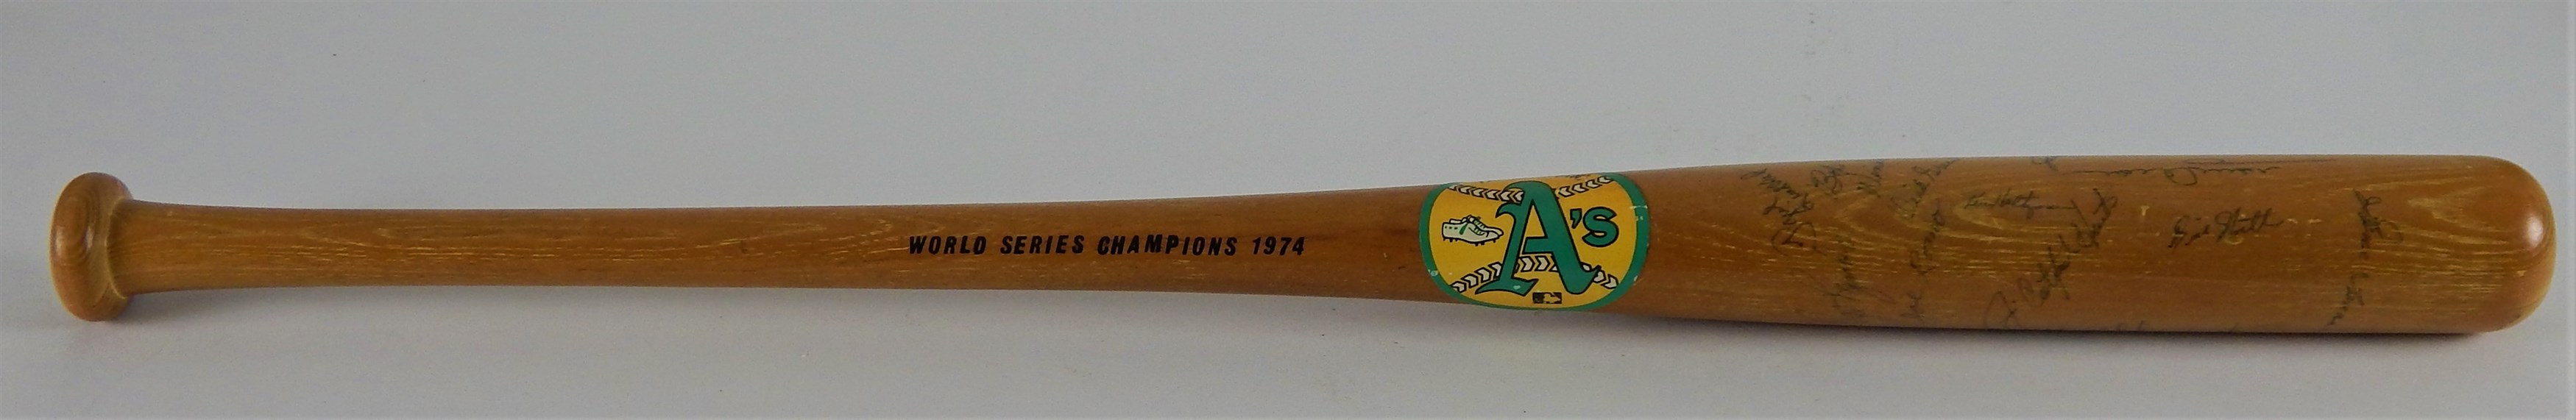 Baseball Autographs - 1974 World Champion Oakland A's Signed Bat